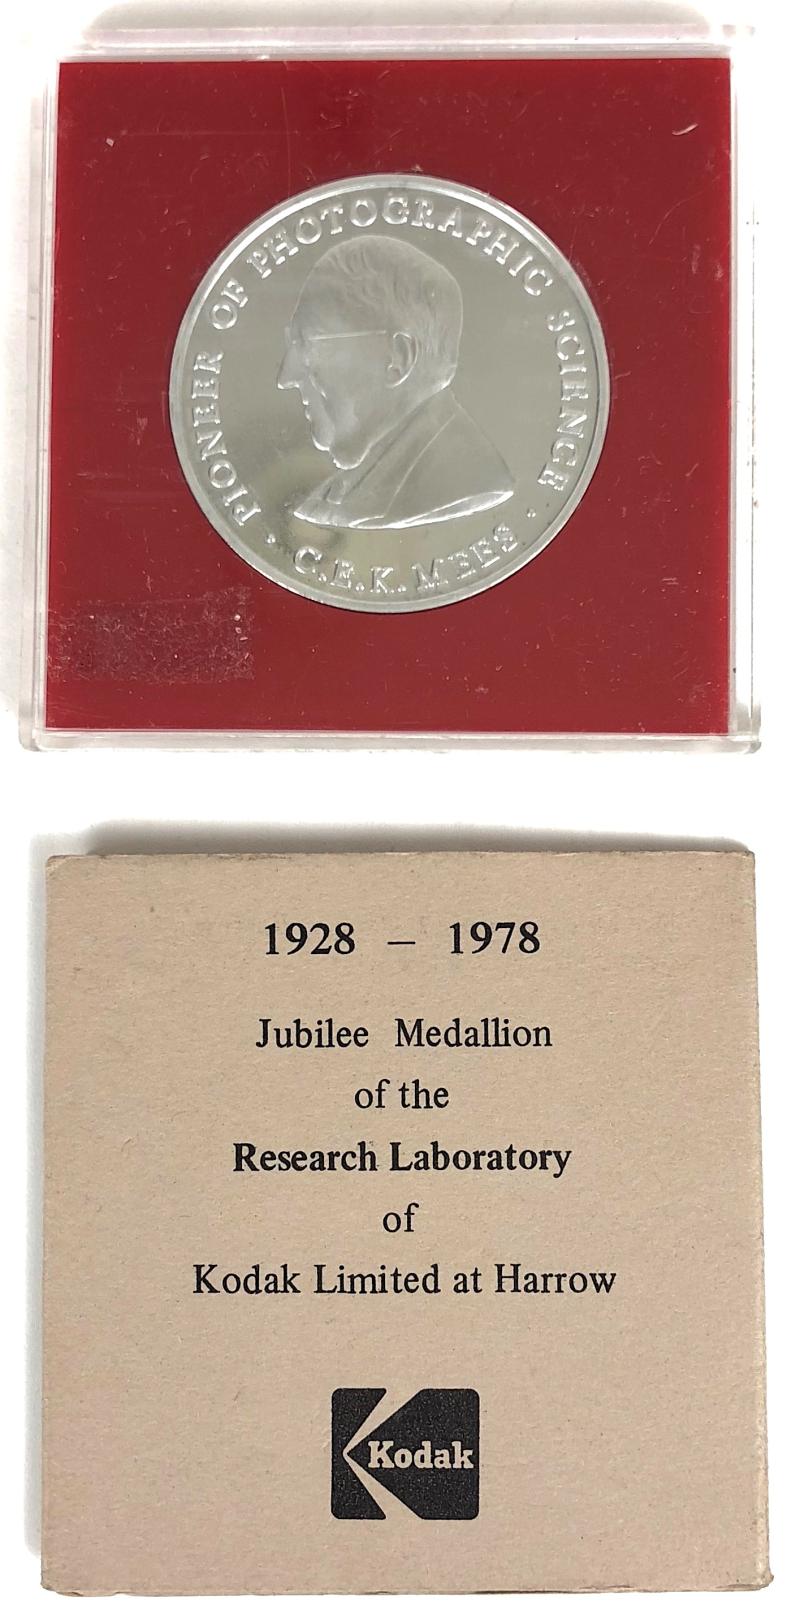 Kodak Camera Harrow 1928 - 1978 Jubilee Medallion of the Research Laboratory